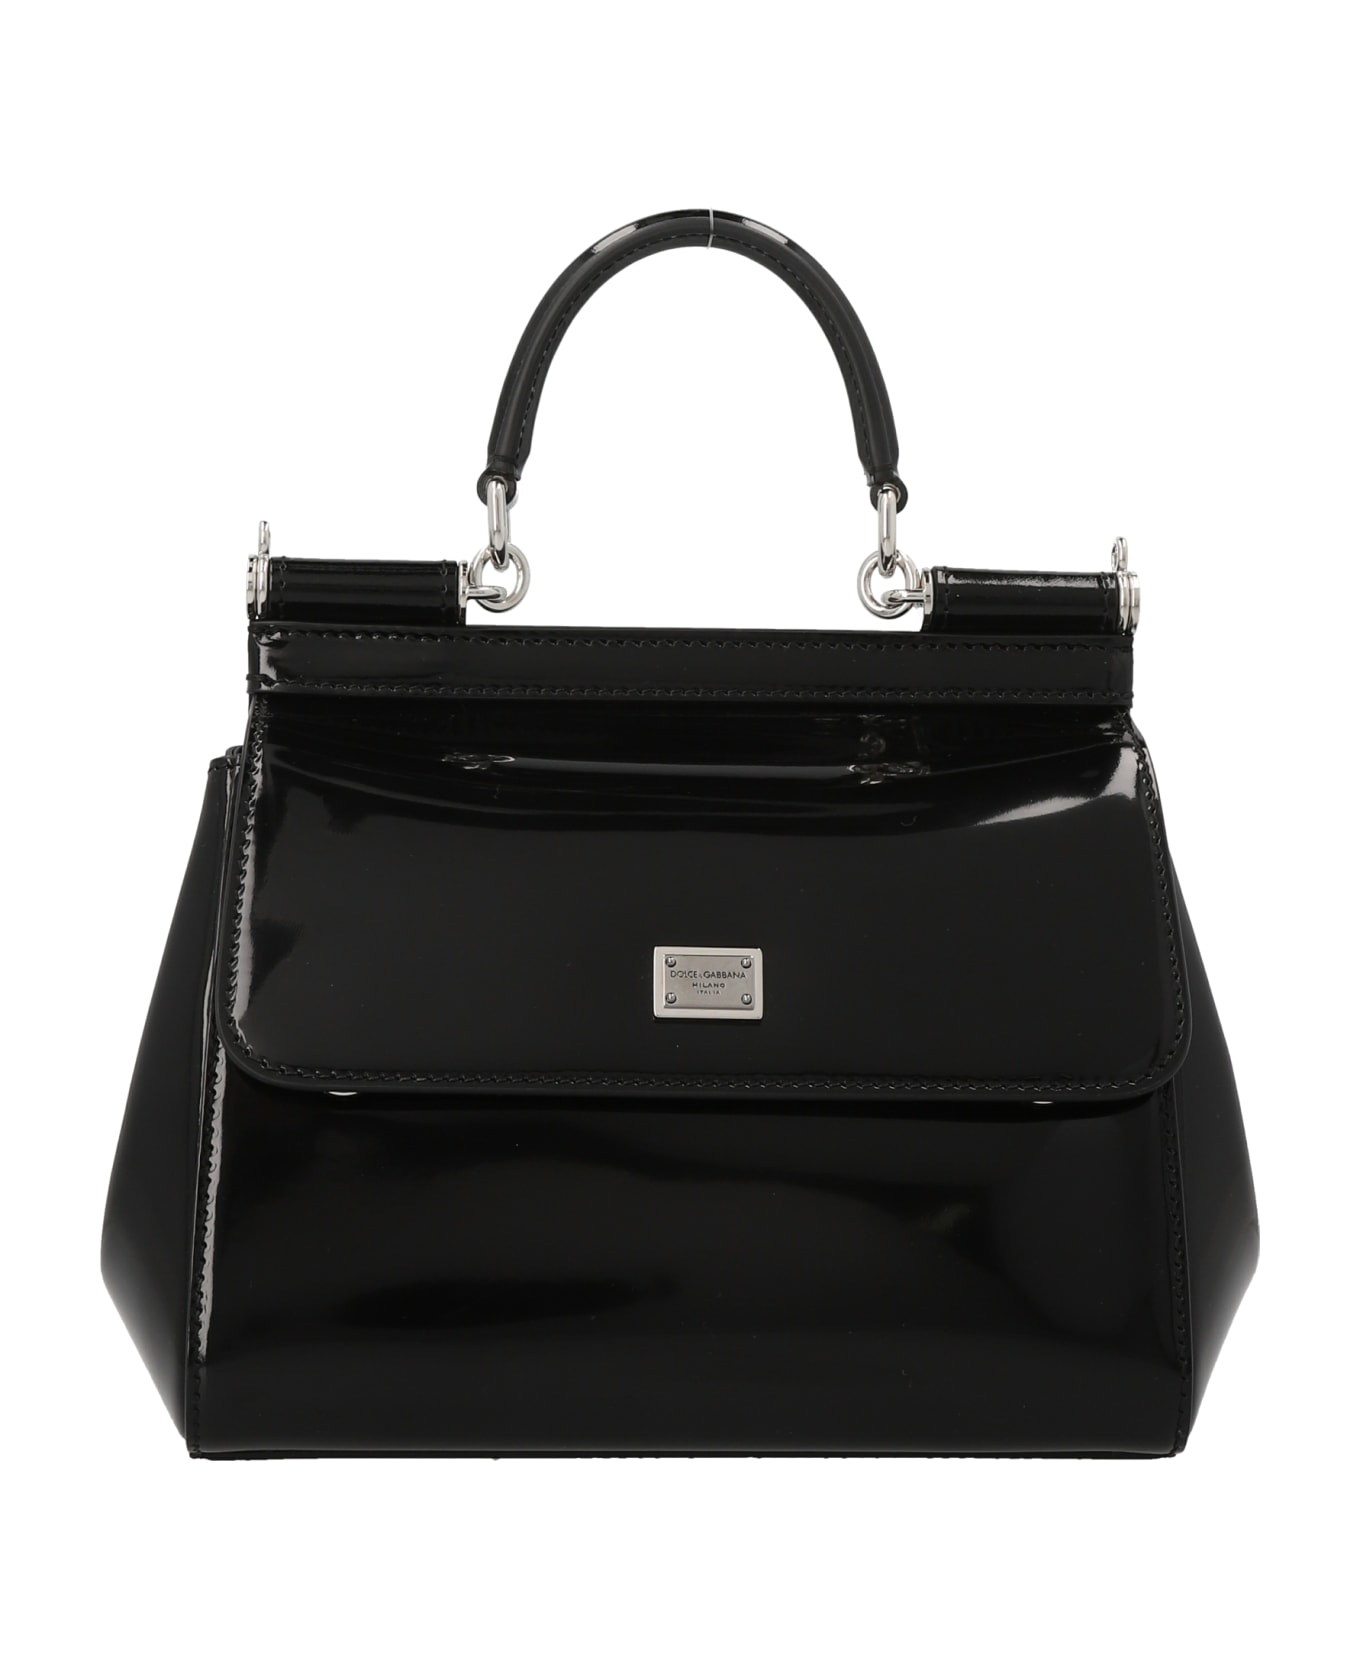 Dolce & Gabbana Logo Leather Handbag - Black  